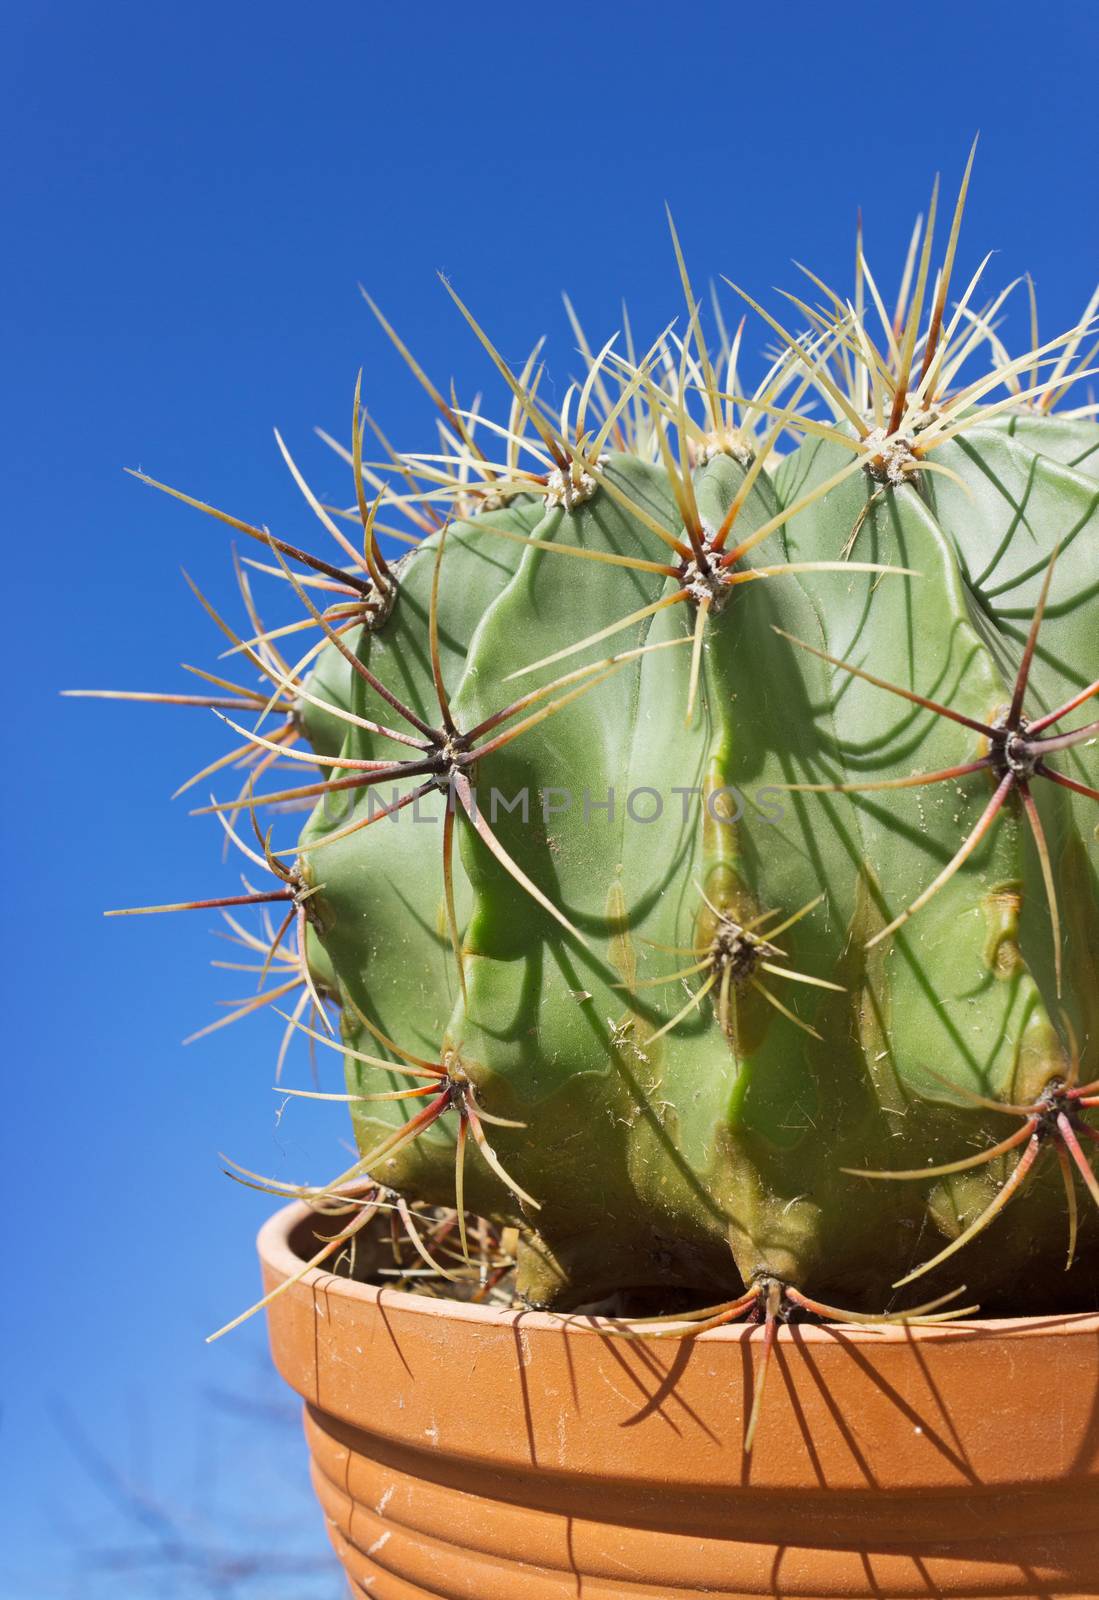 Cactus Astrophytum home on blue sky background